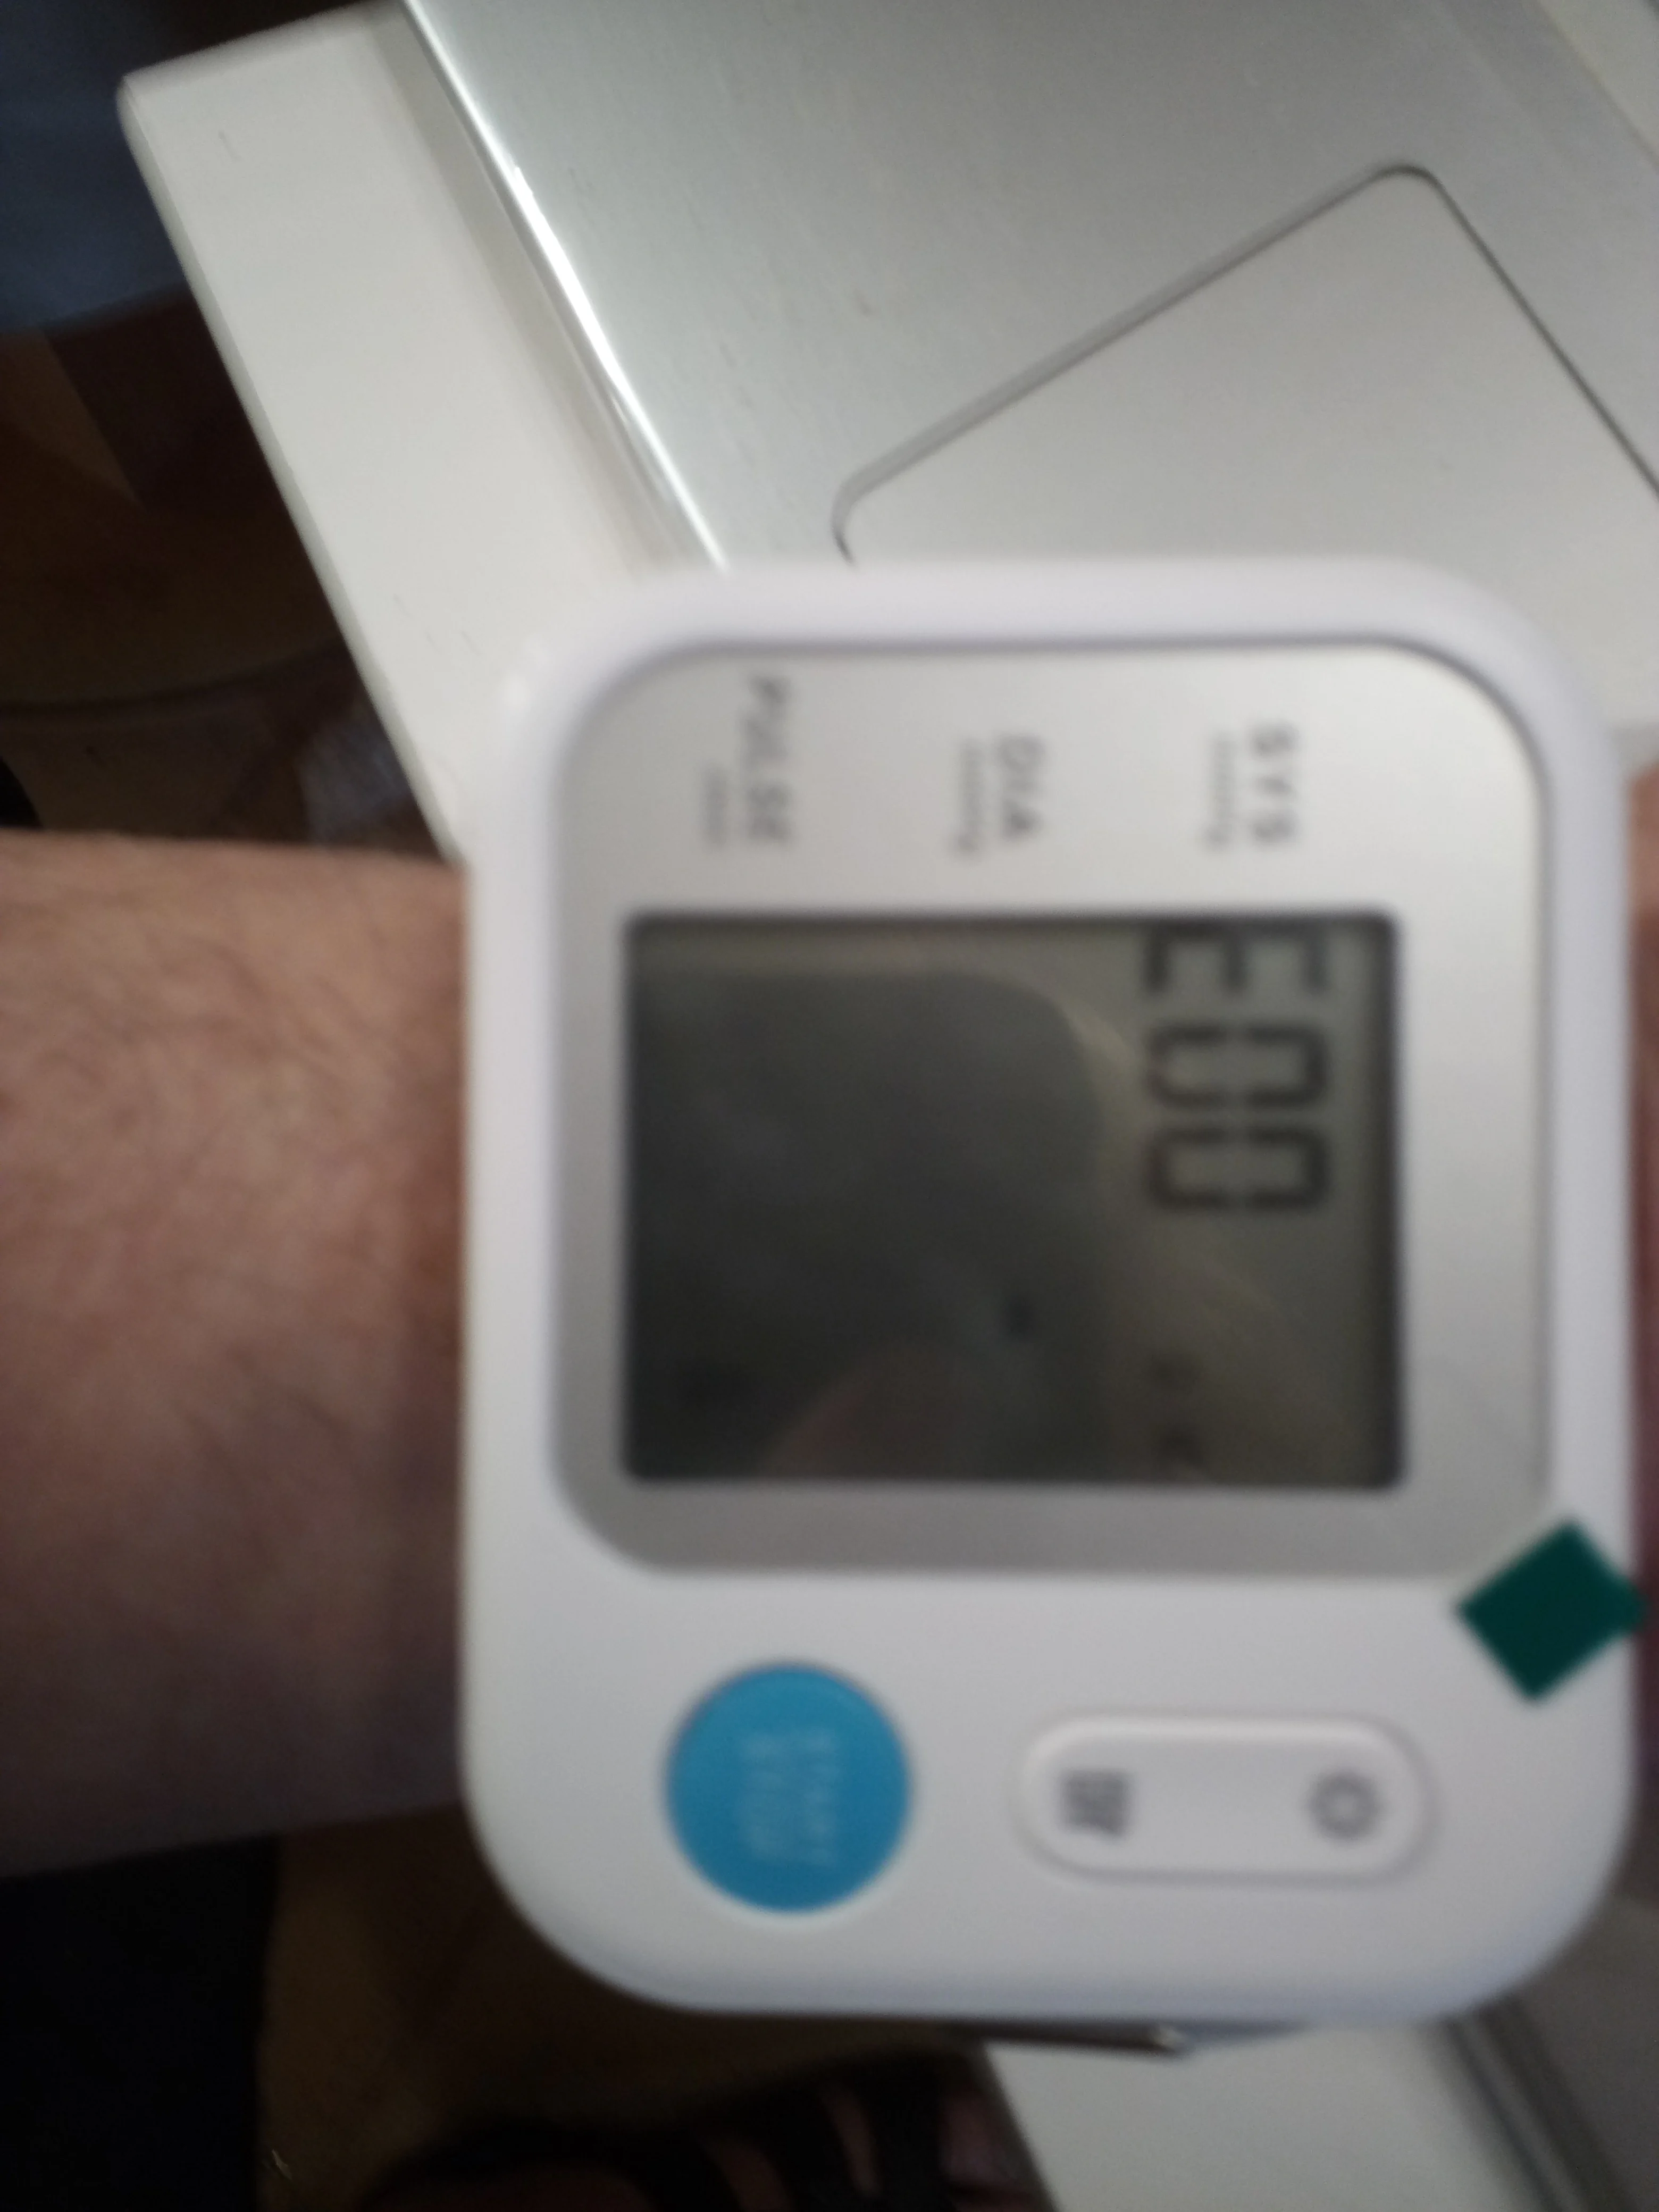 BOXYM Medical Digital LCD Wrist Blood Pressure Monitor Automatic sphygmomanometer Tonometer wrist Blood Pressure Mete Tonometer